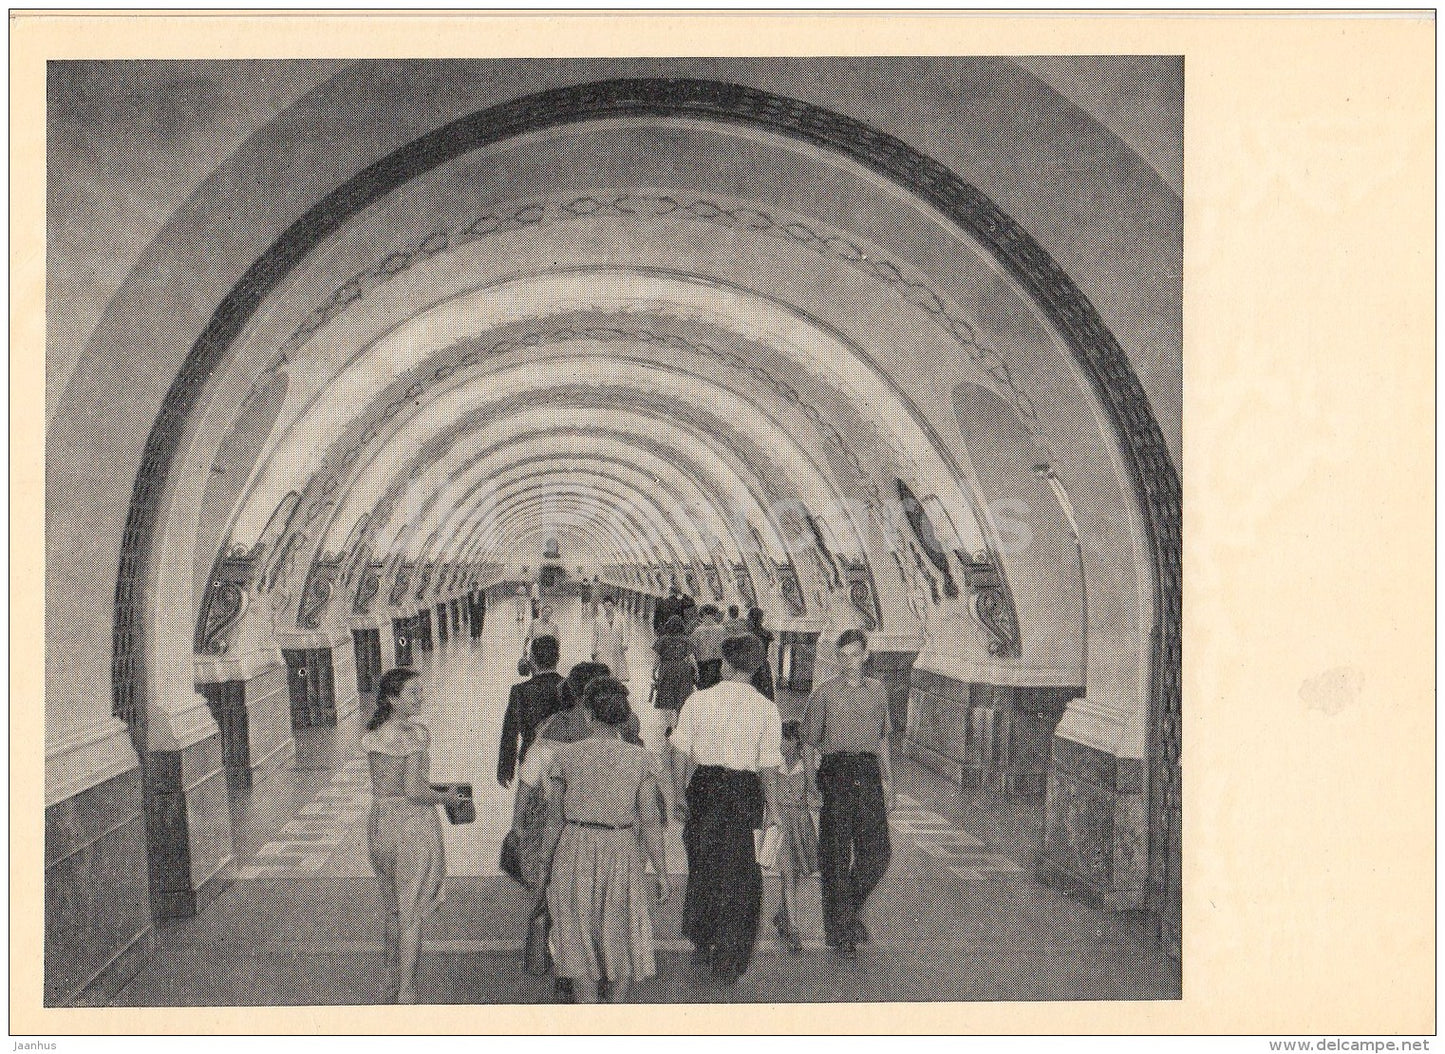 Uprising square station , Platfrom hall - Leningrad Metro - subway - St. Petersburg - 1960 - Russia USSR - unused - JH Postcards